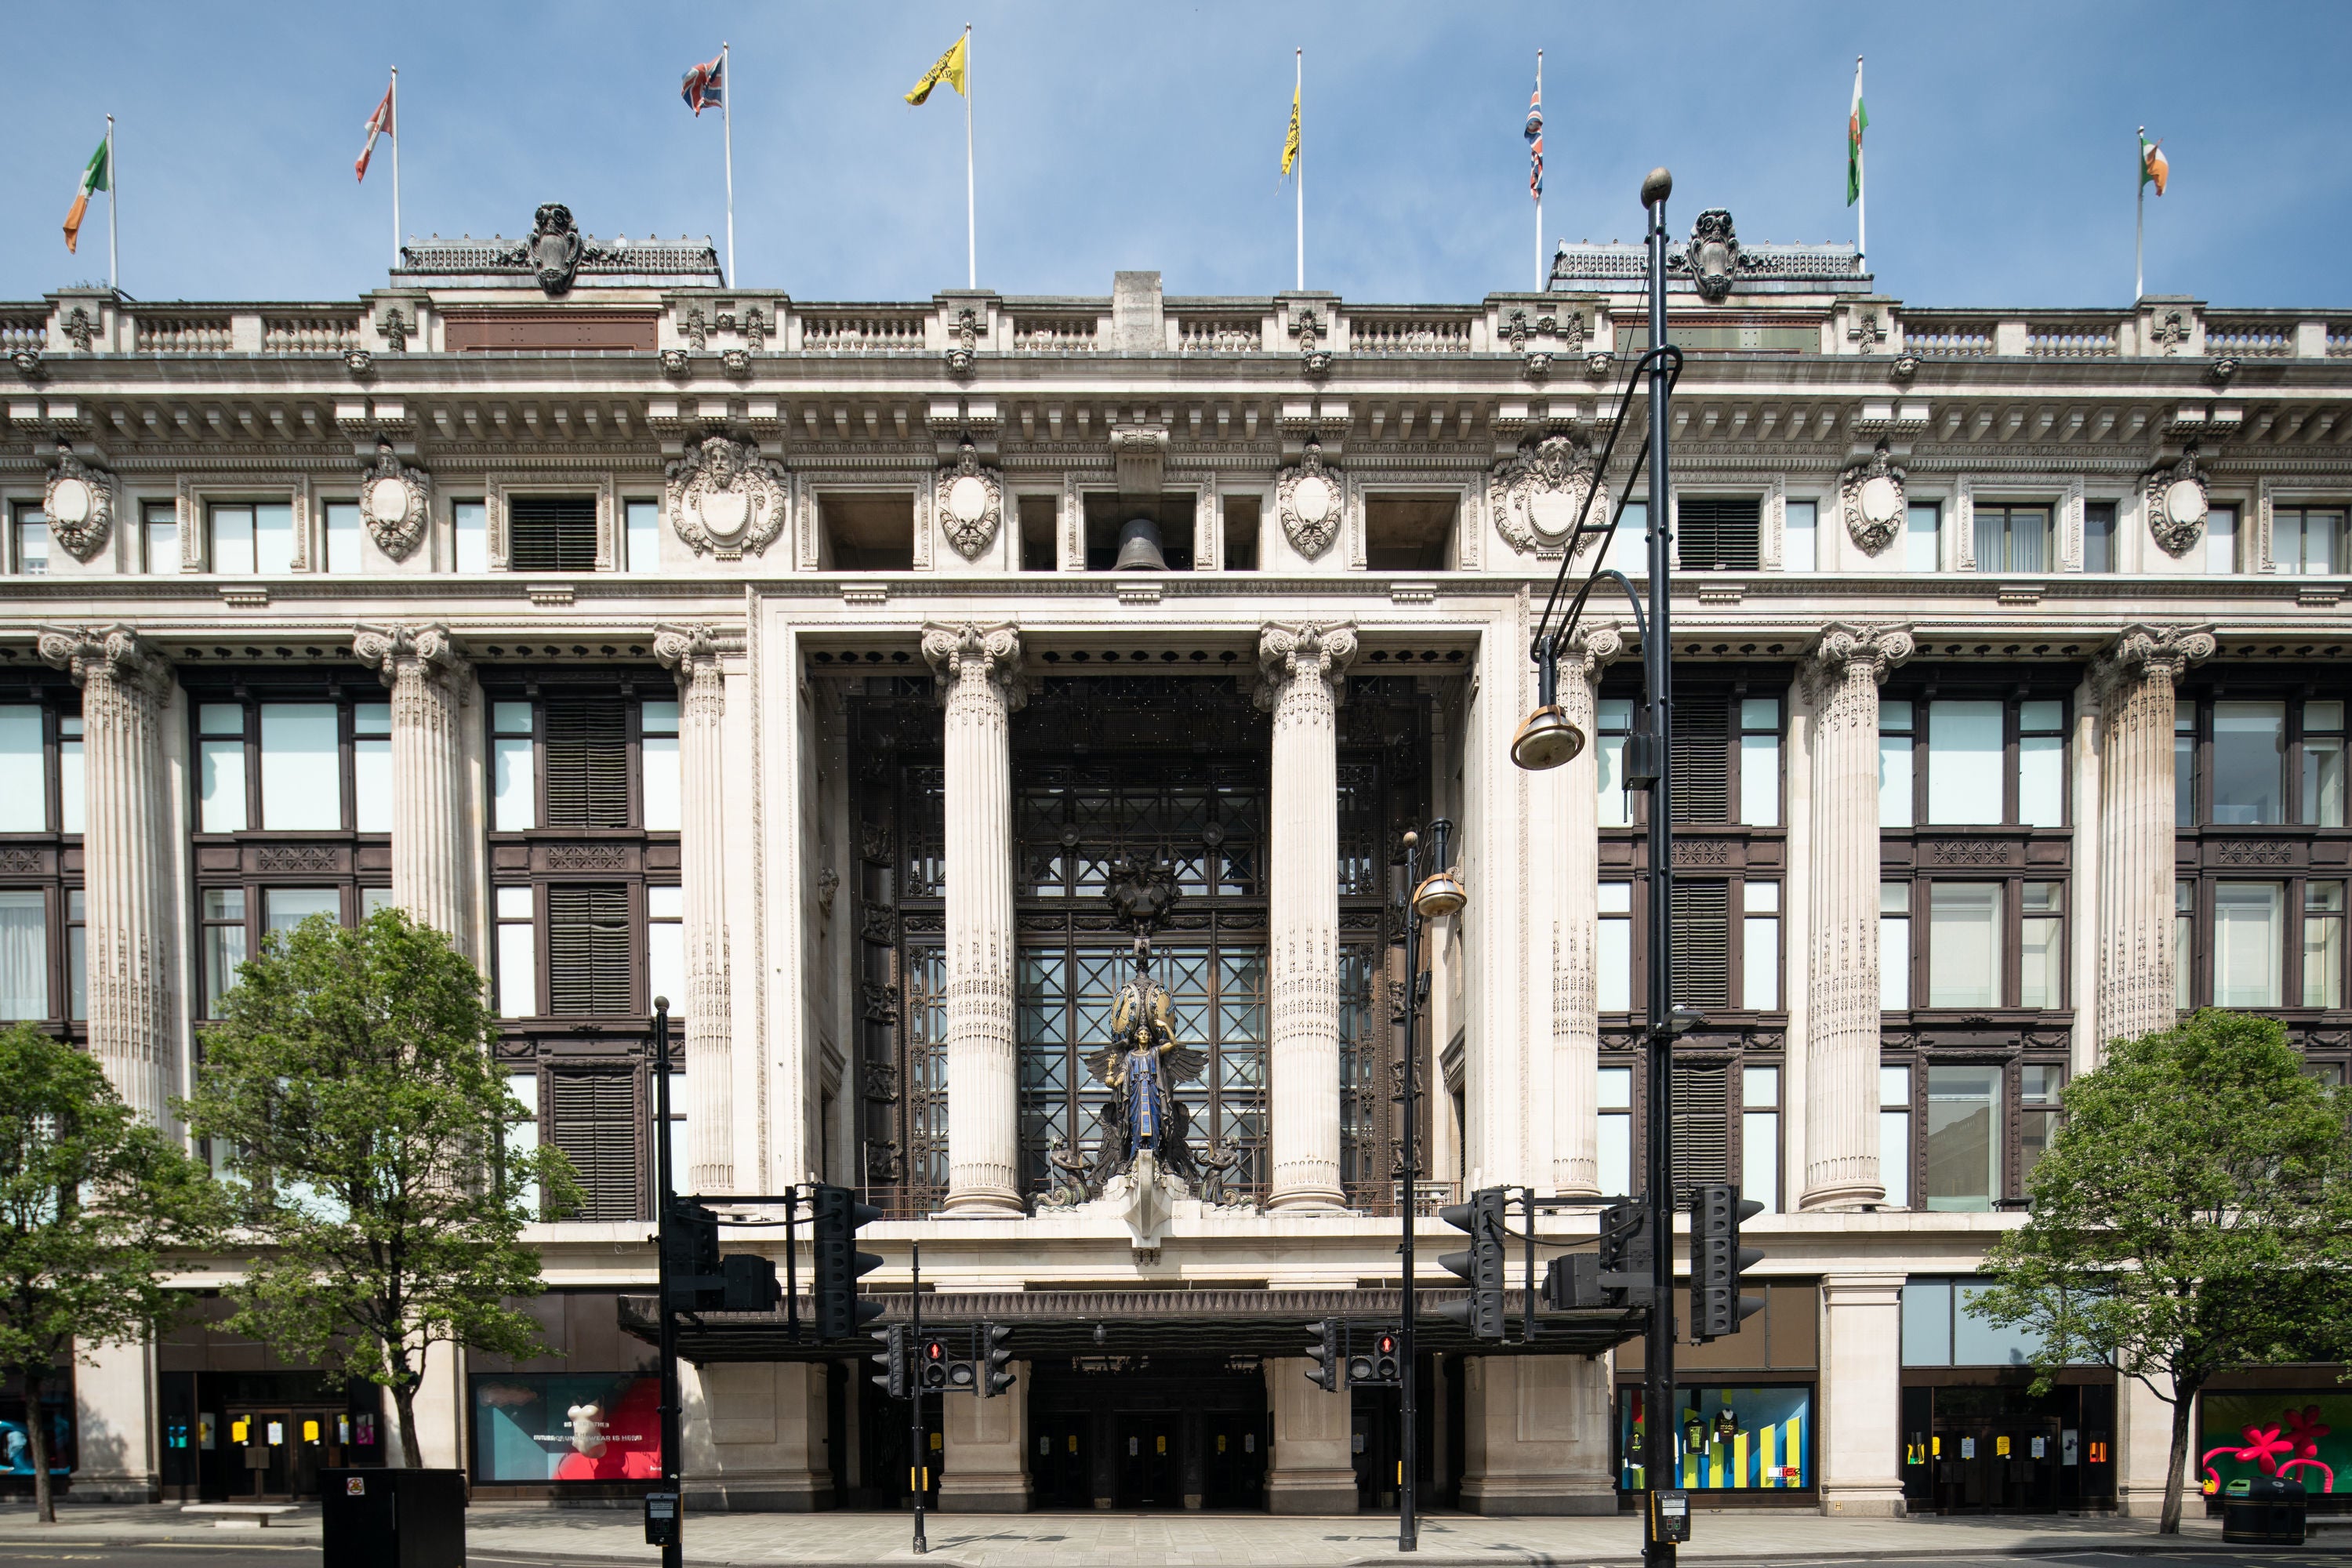 Flagship Selfridges department store on Oxford Street in London.